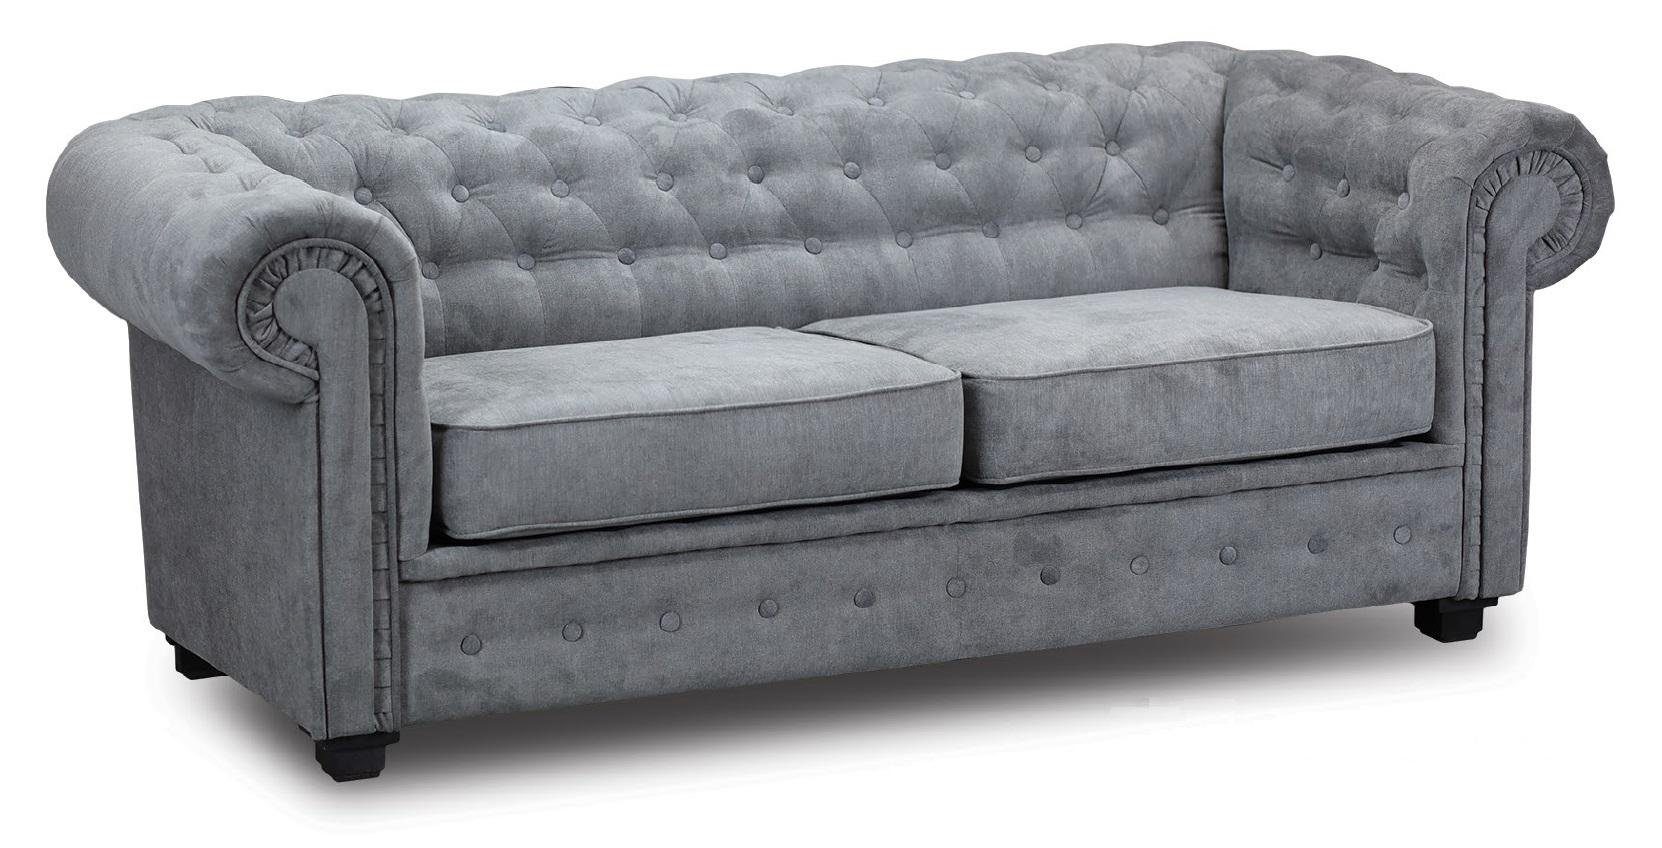 Neu, Möbel Europe Polster Zweisitzer JVmoebel Couch Couch Made in Graue Chesterfield Sofa